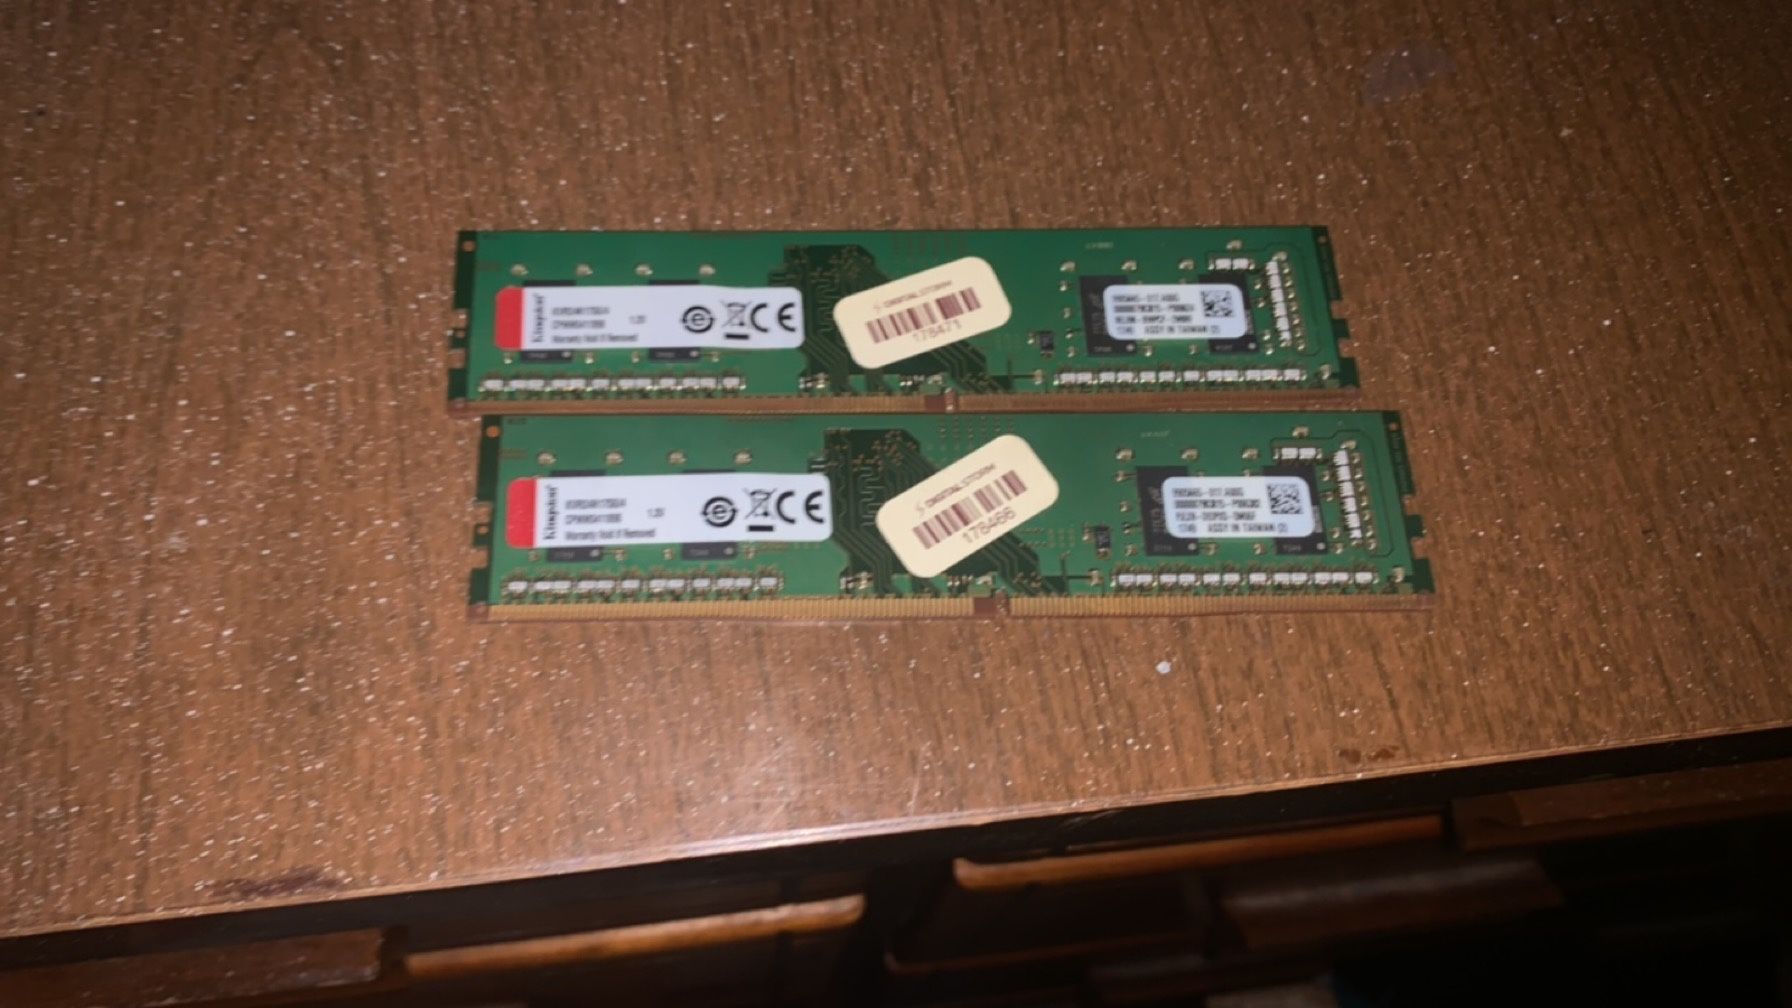 2 Sticks Of 4gb DDR4 Ram